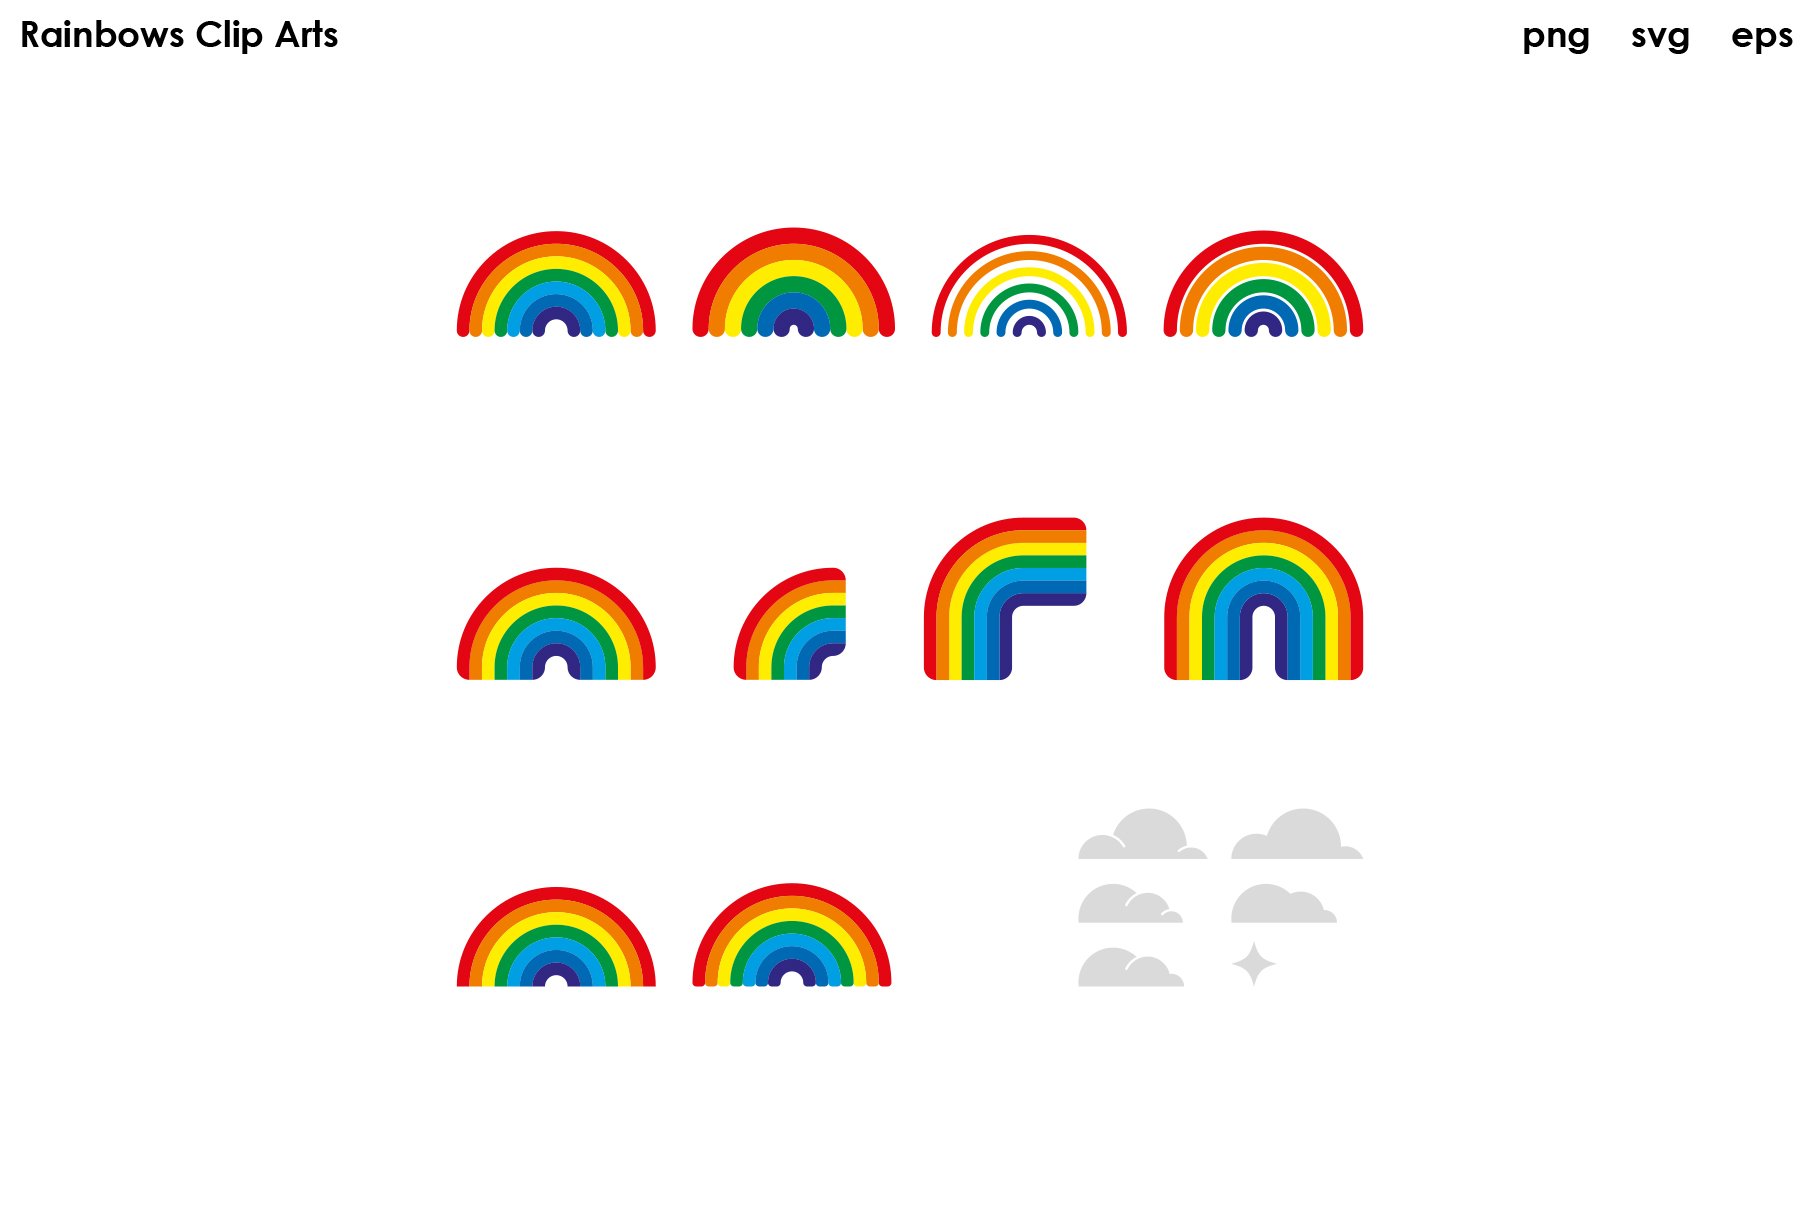 Rainbows Clip Arts - PNG, SVG, EPS preview image.